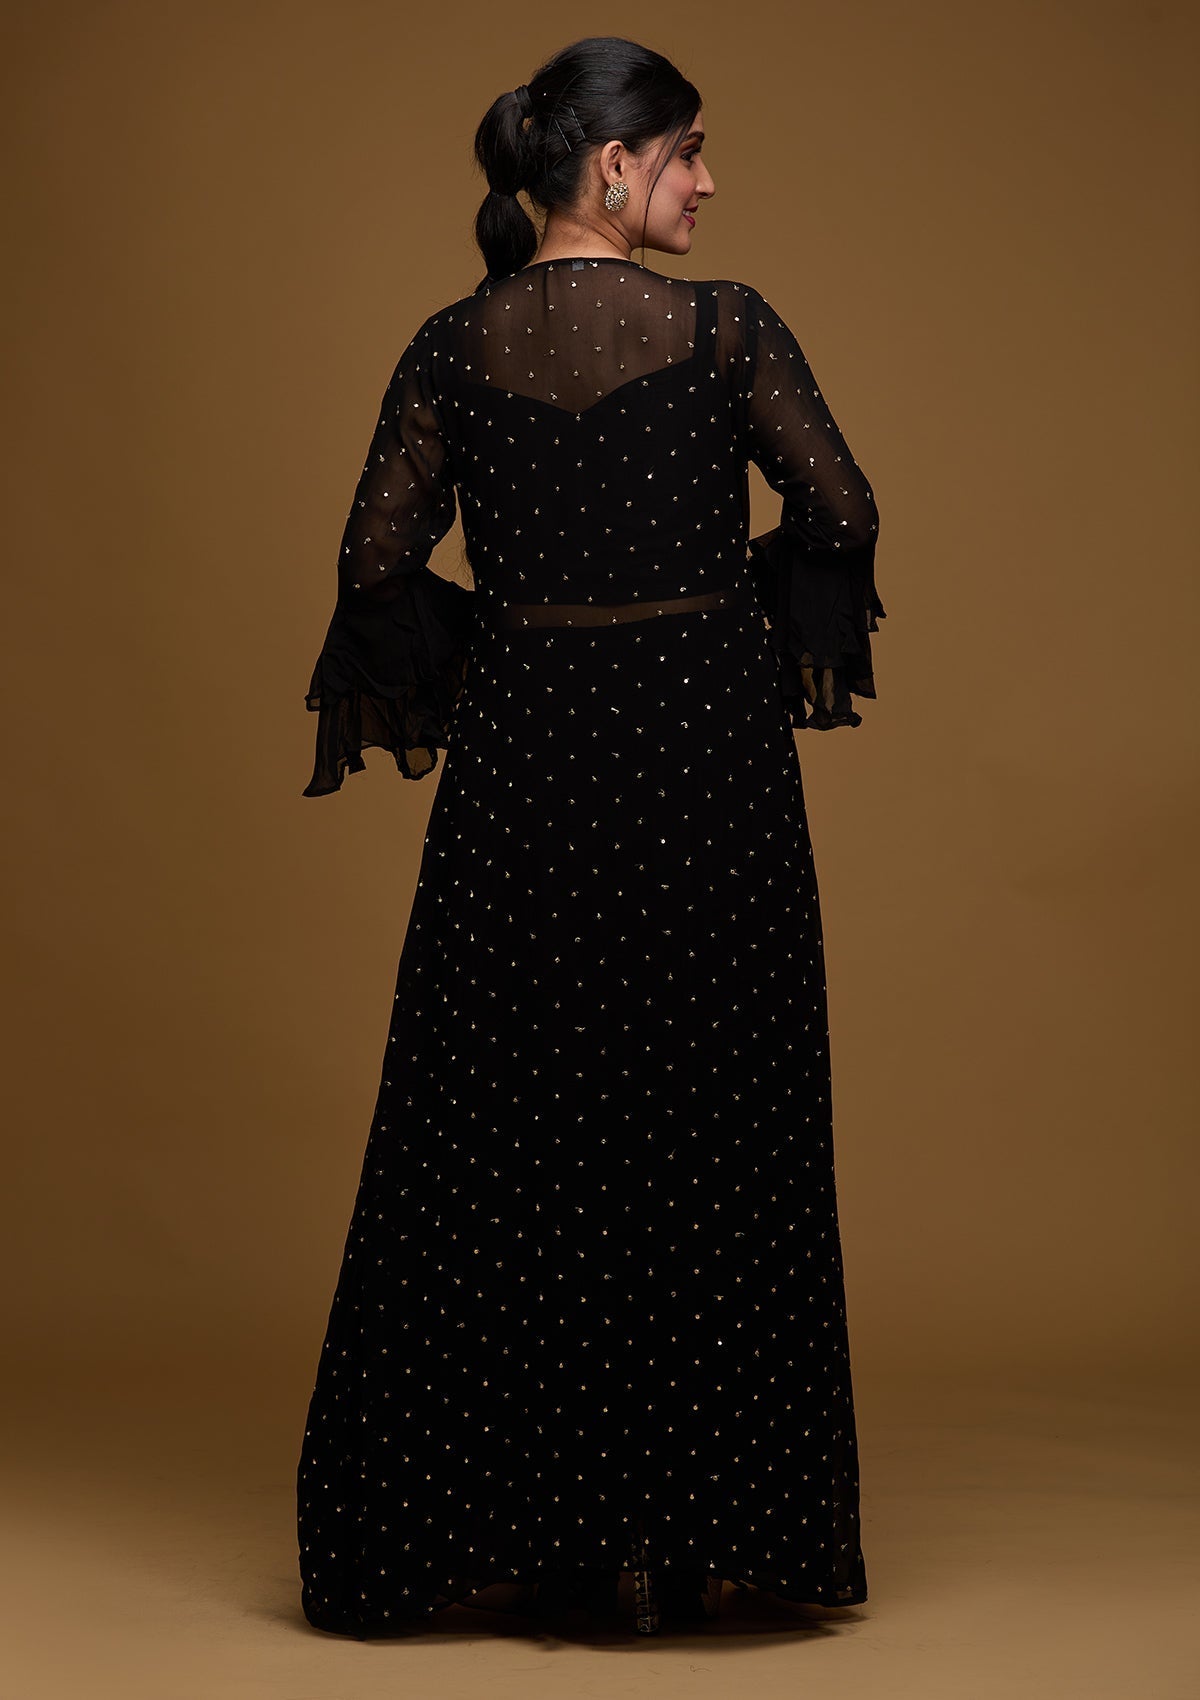 Black Swarovski Georgette Designer Salwar Suit - Koskii